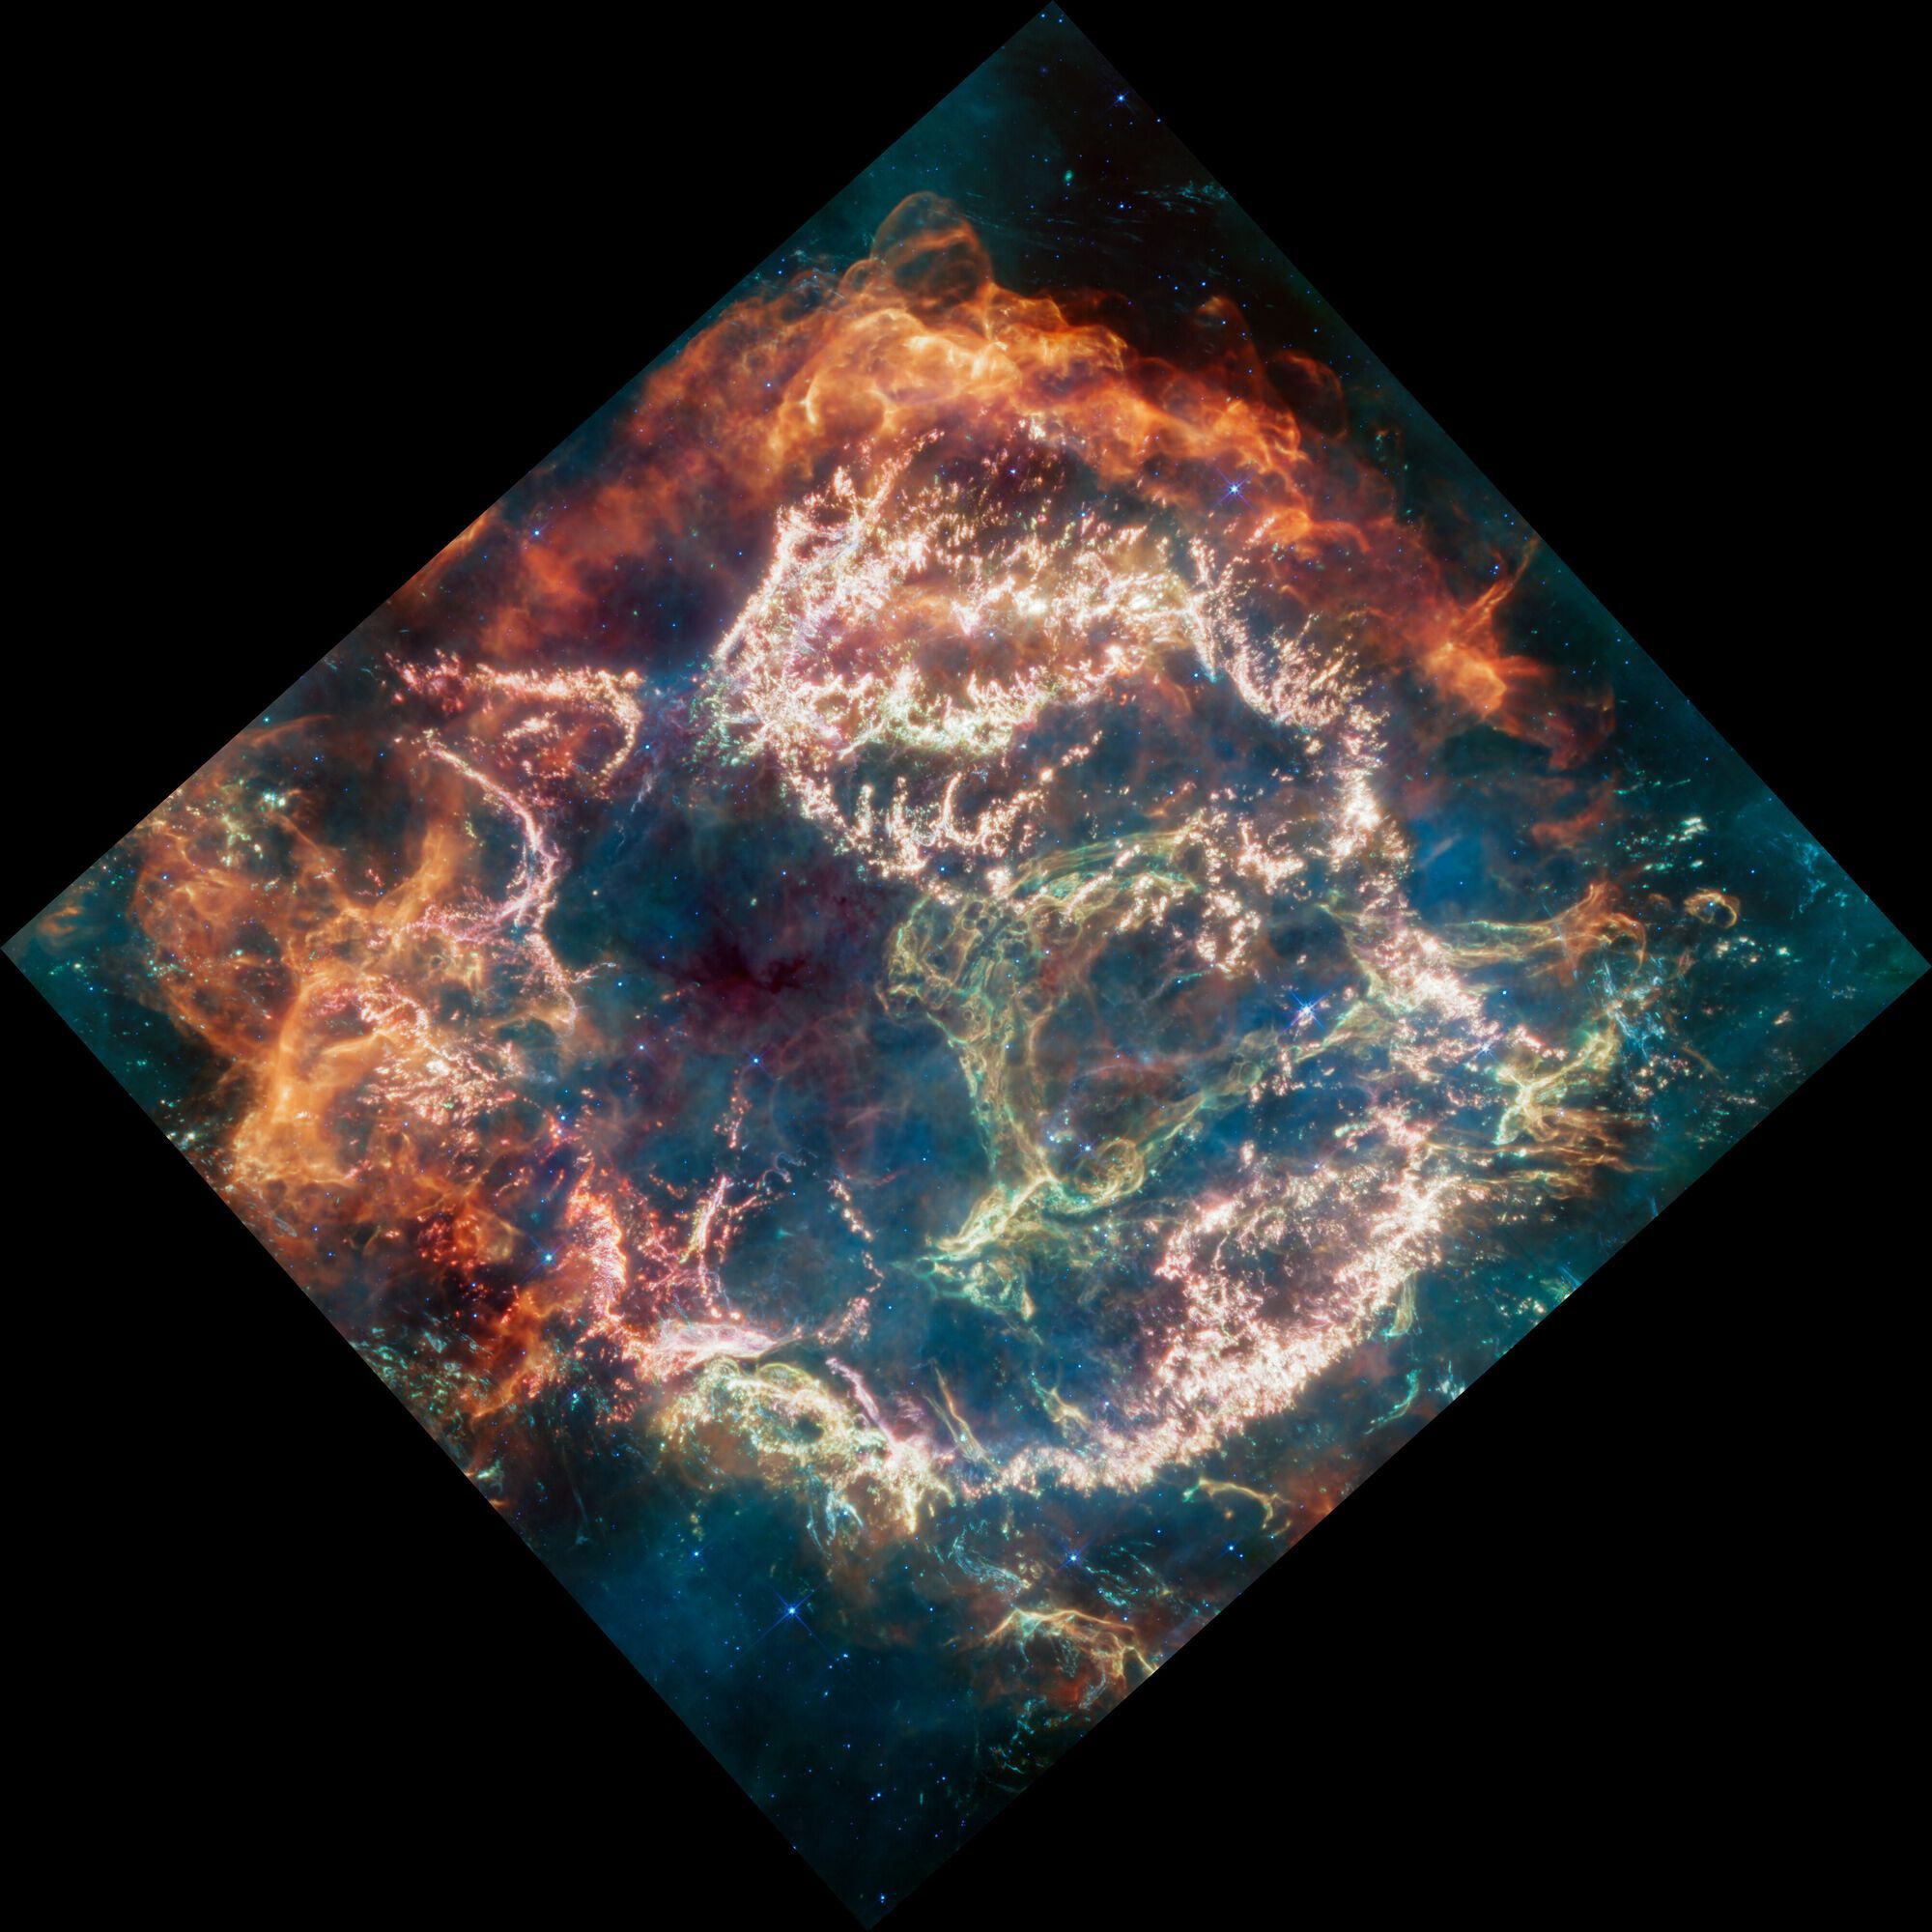 Supernova Cassiopeia A by NASA's James Webb Space Telescope (JWST) in 2023